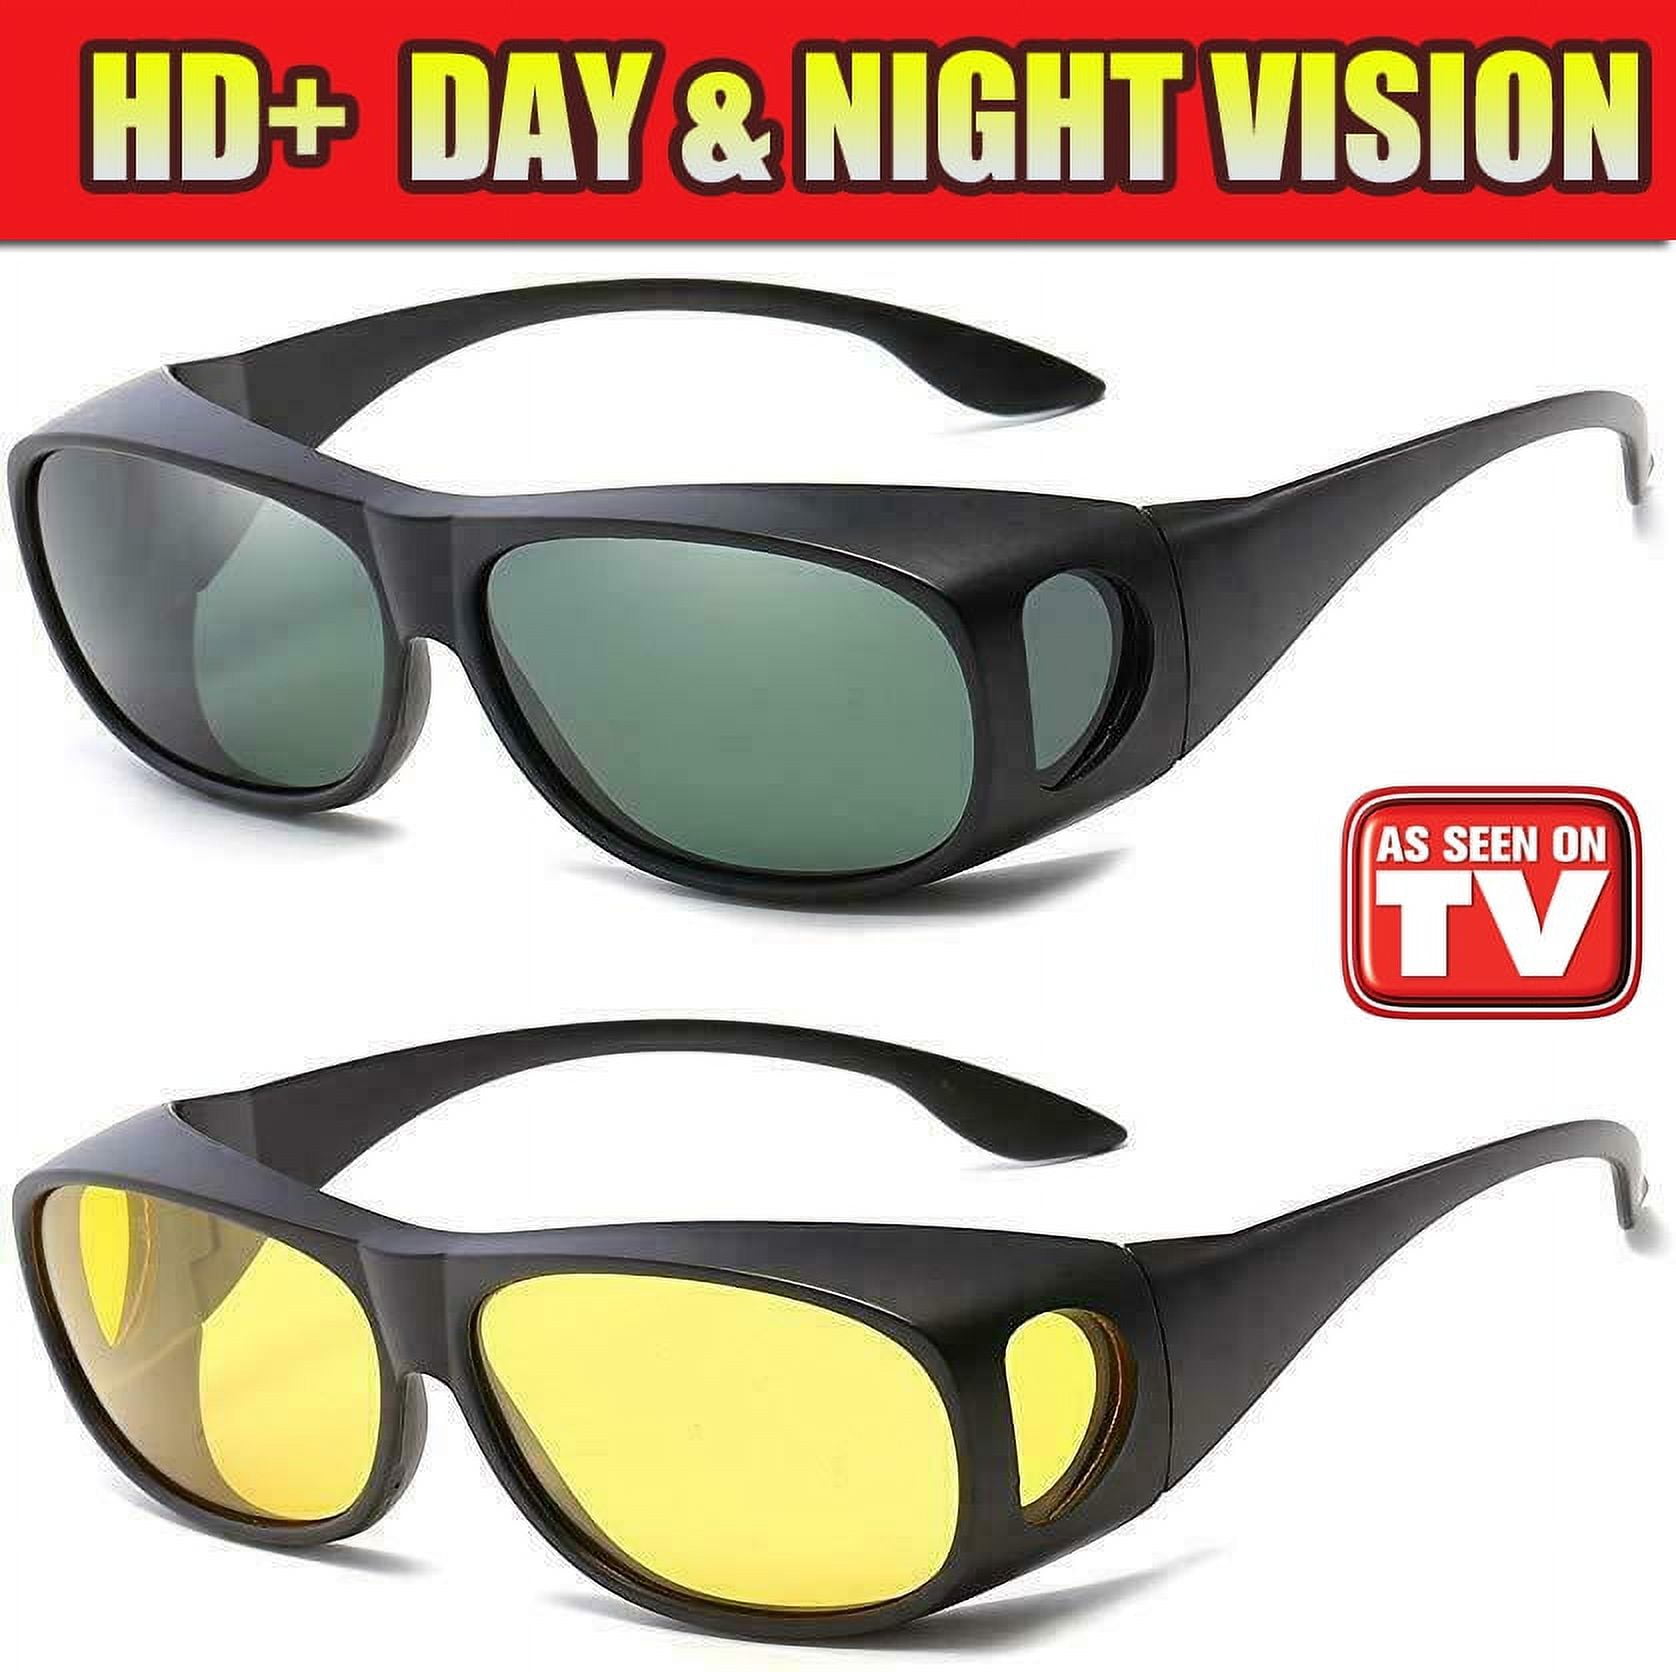 Details more than 280 battle vision sunglasses walmart latest